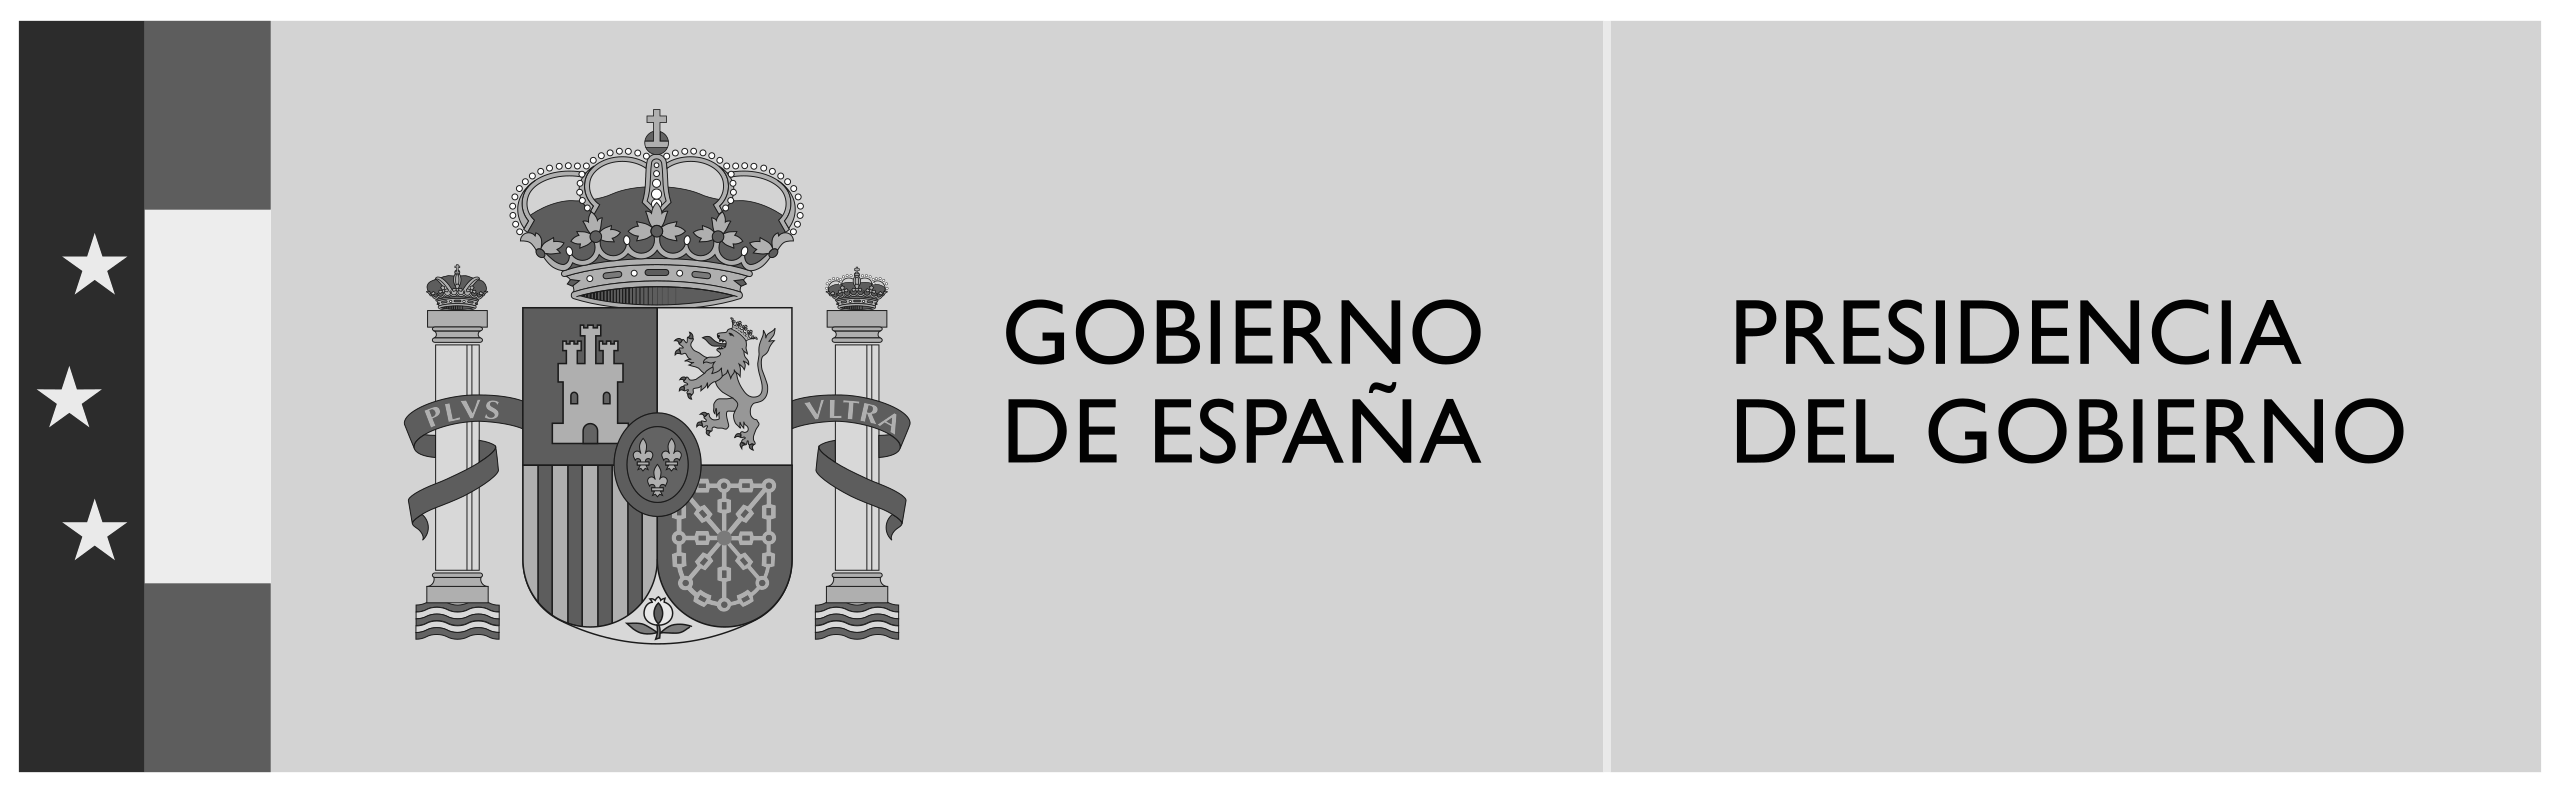 Presidencia de Gobierno. Gobierno de España